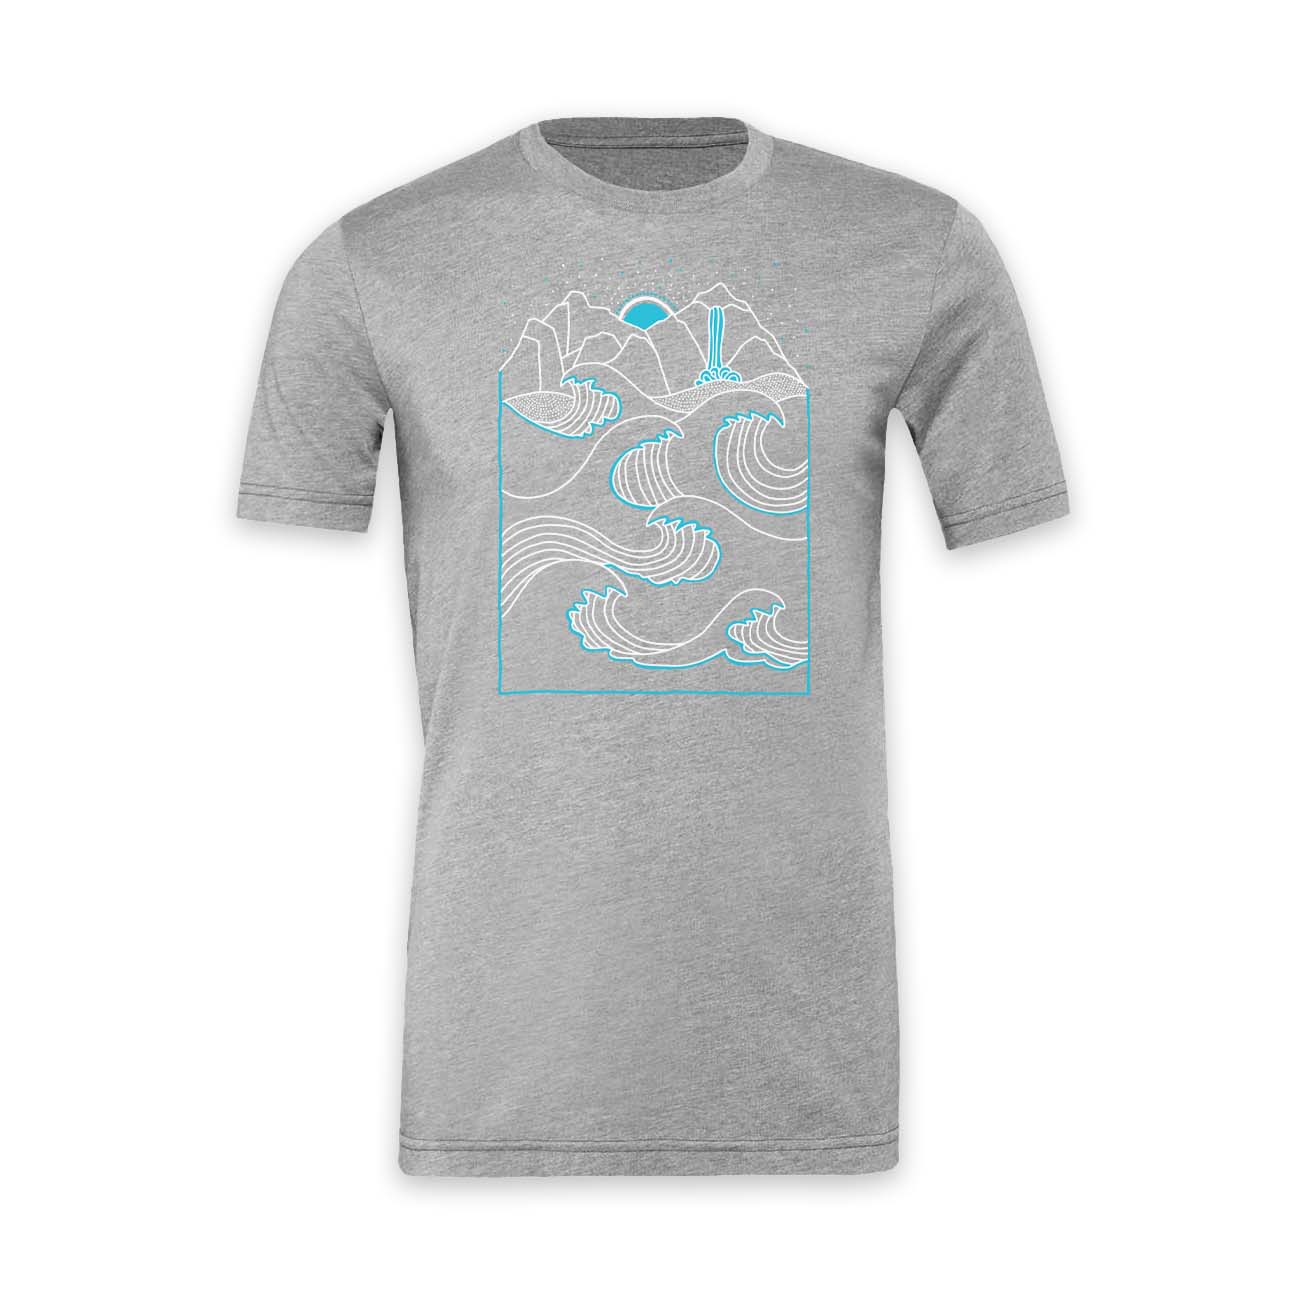 Mountains to Sea Crew T-shirt - Ketsol